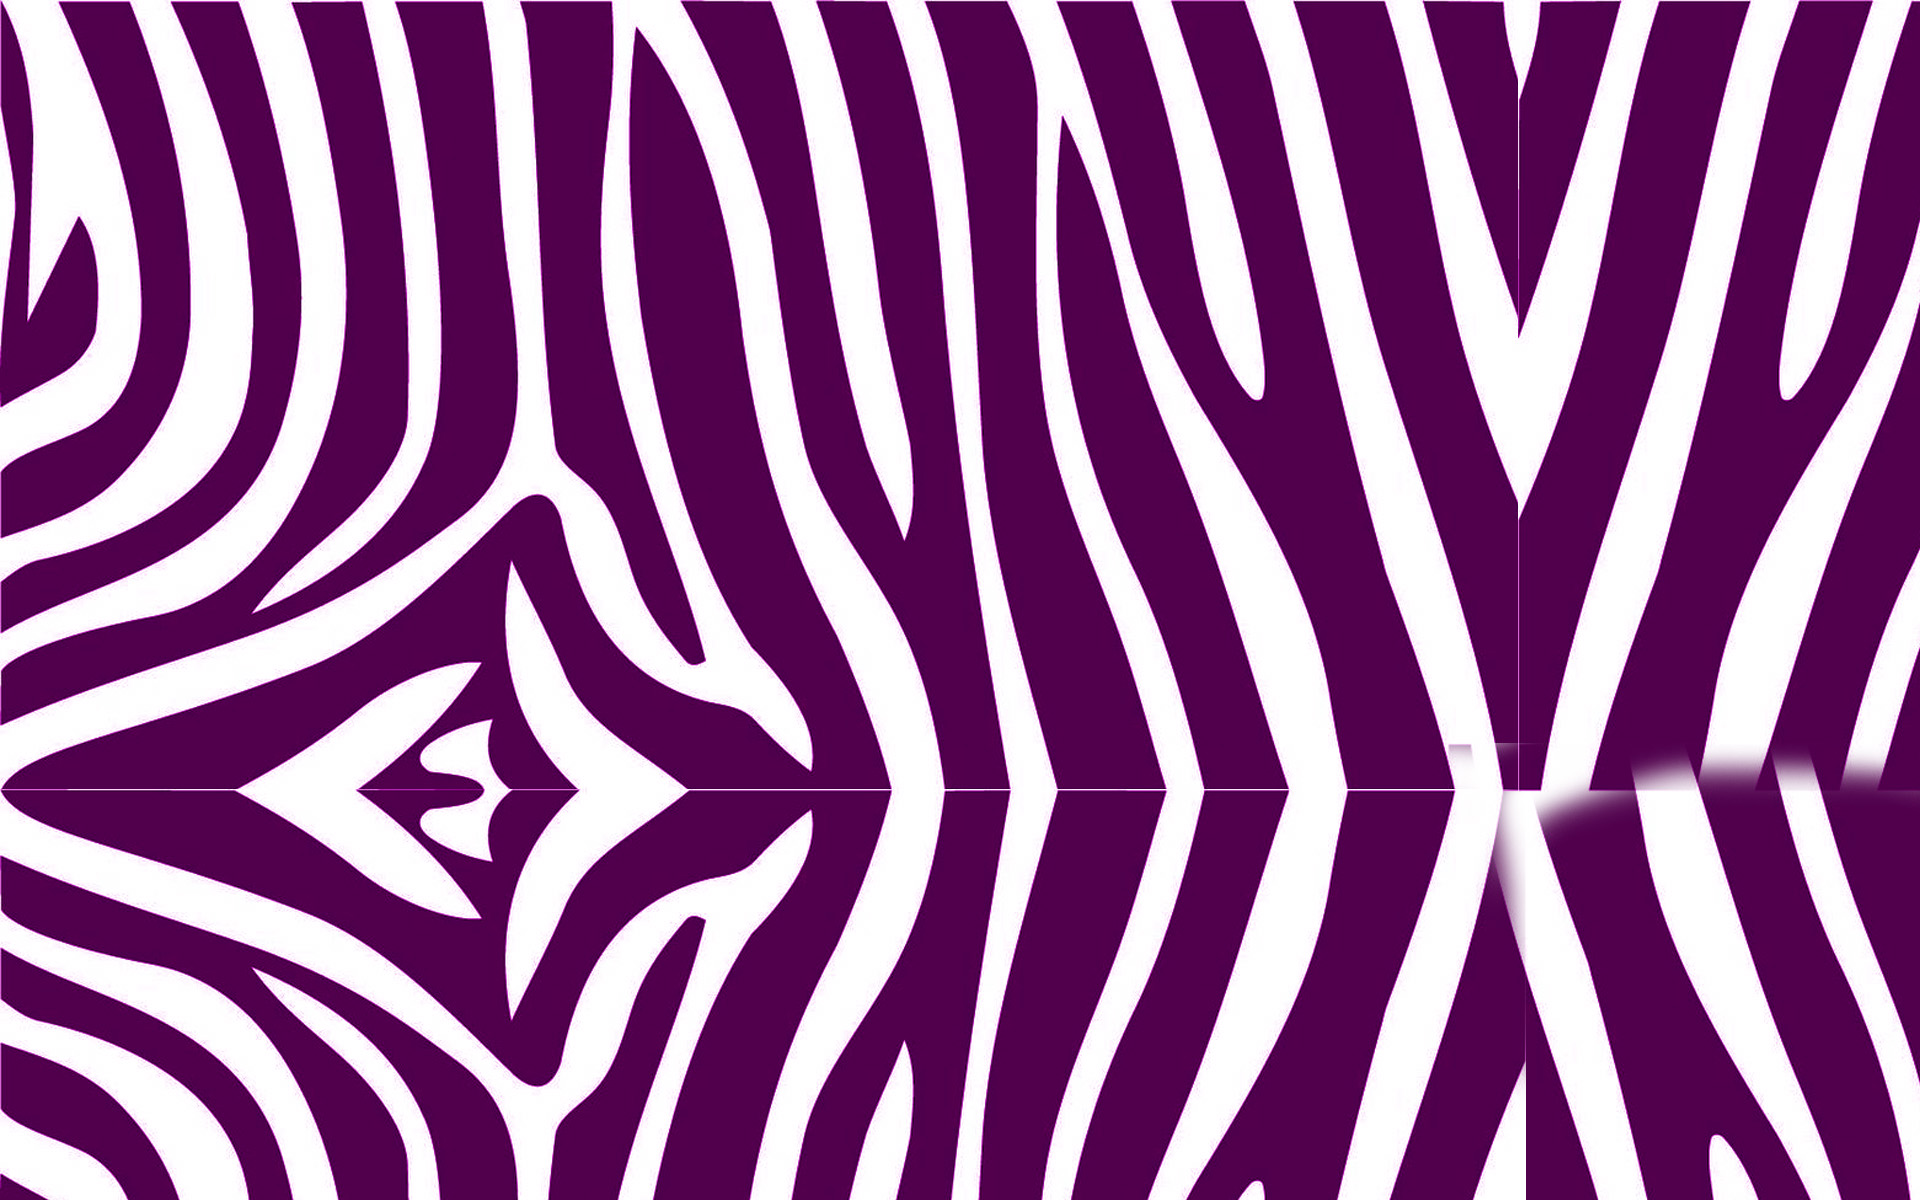 Zebra Print Wallpaper Pictures - Home Decor IdeasHome Decor Ideas